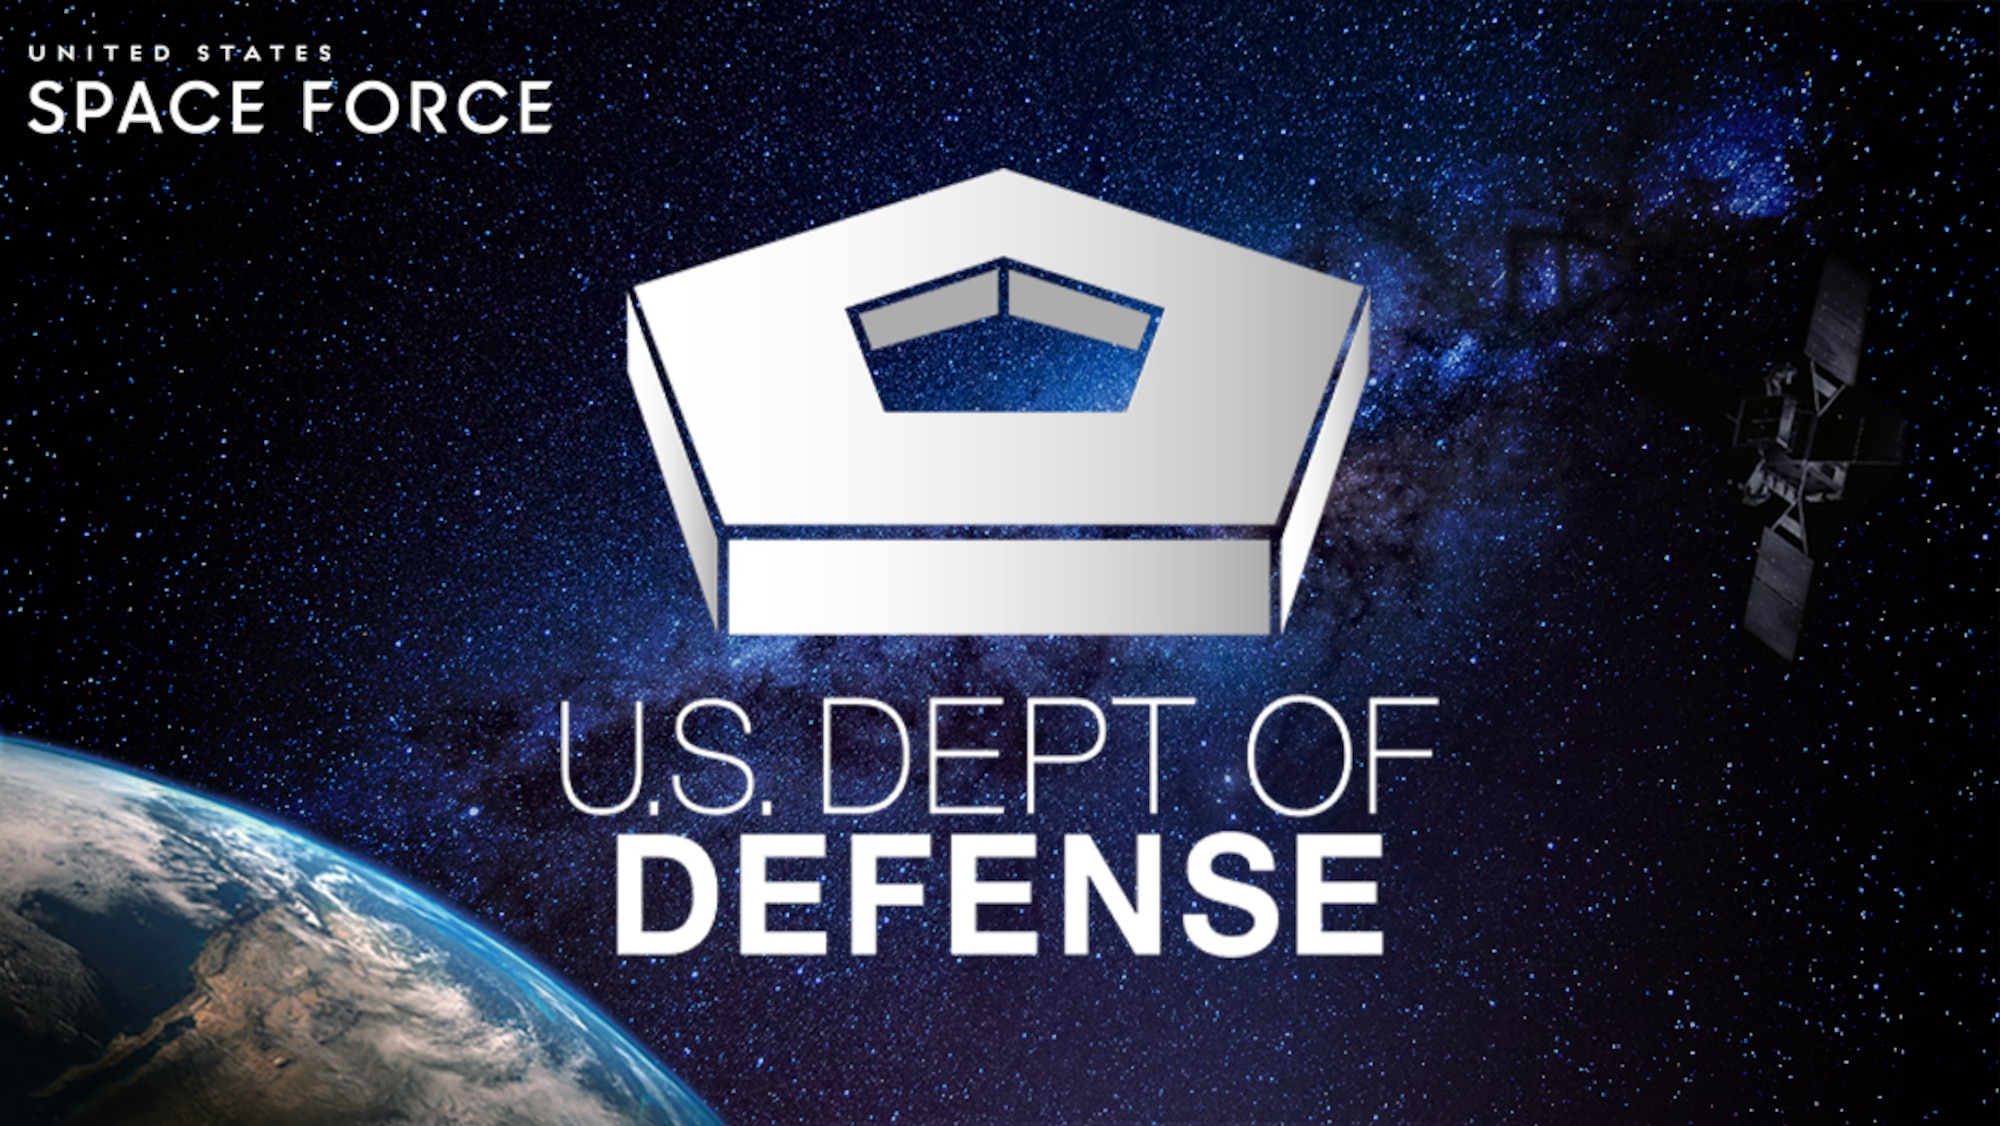 Department of Defense Graphic